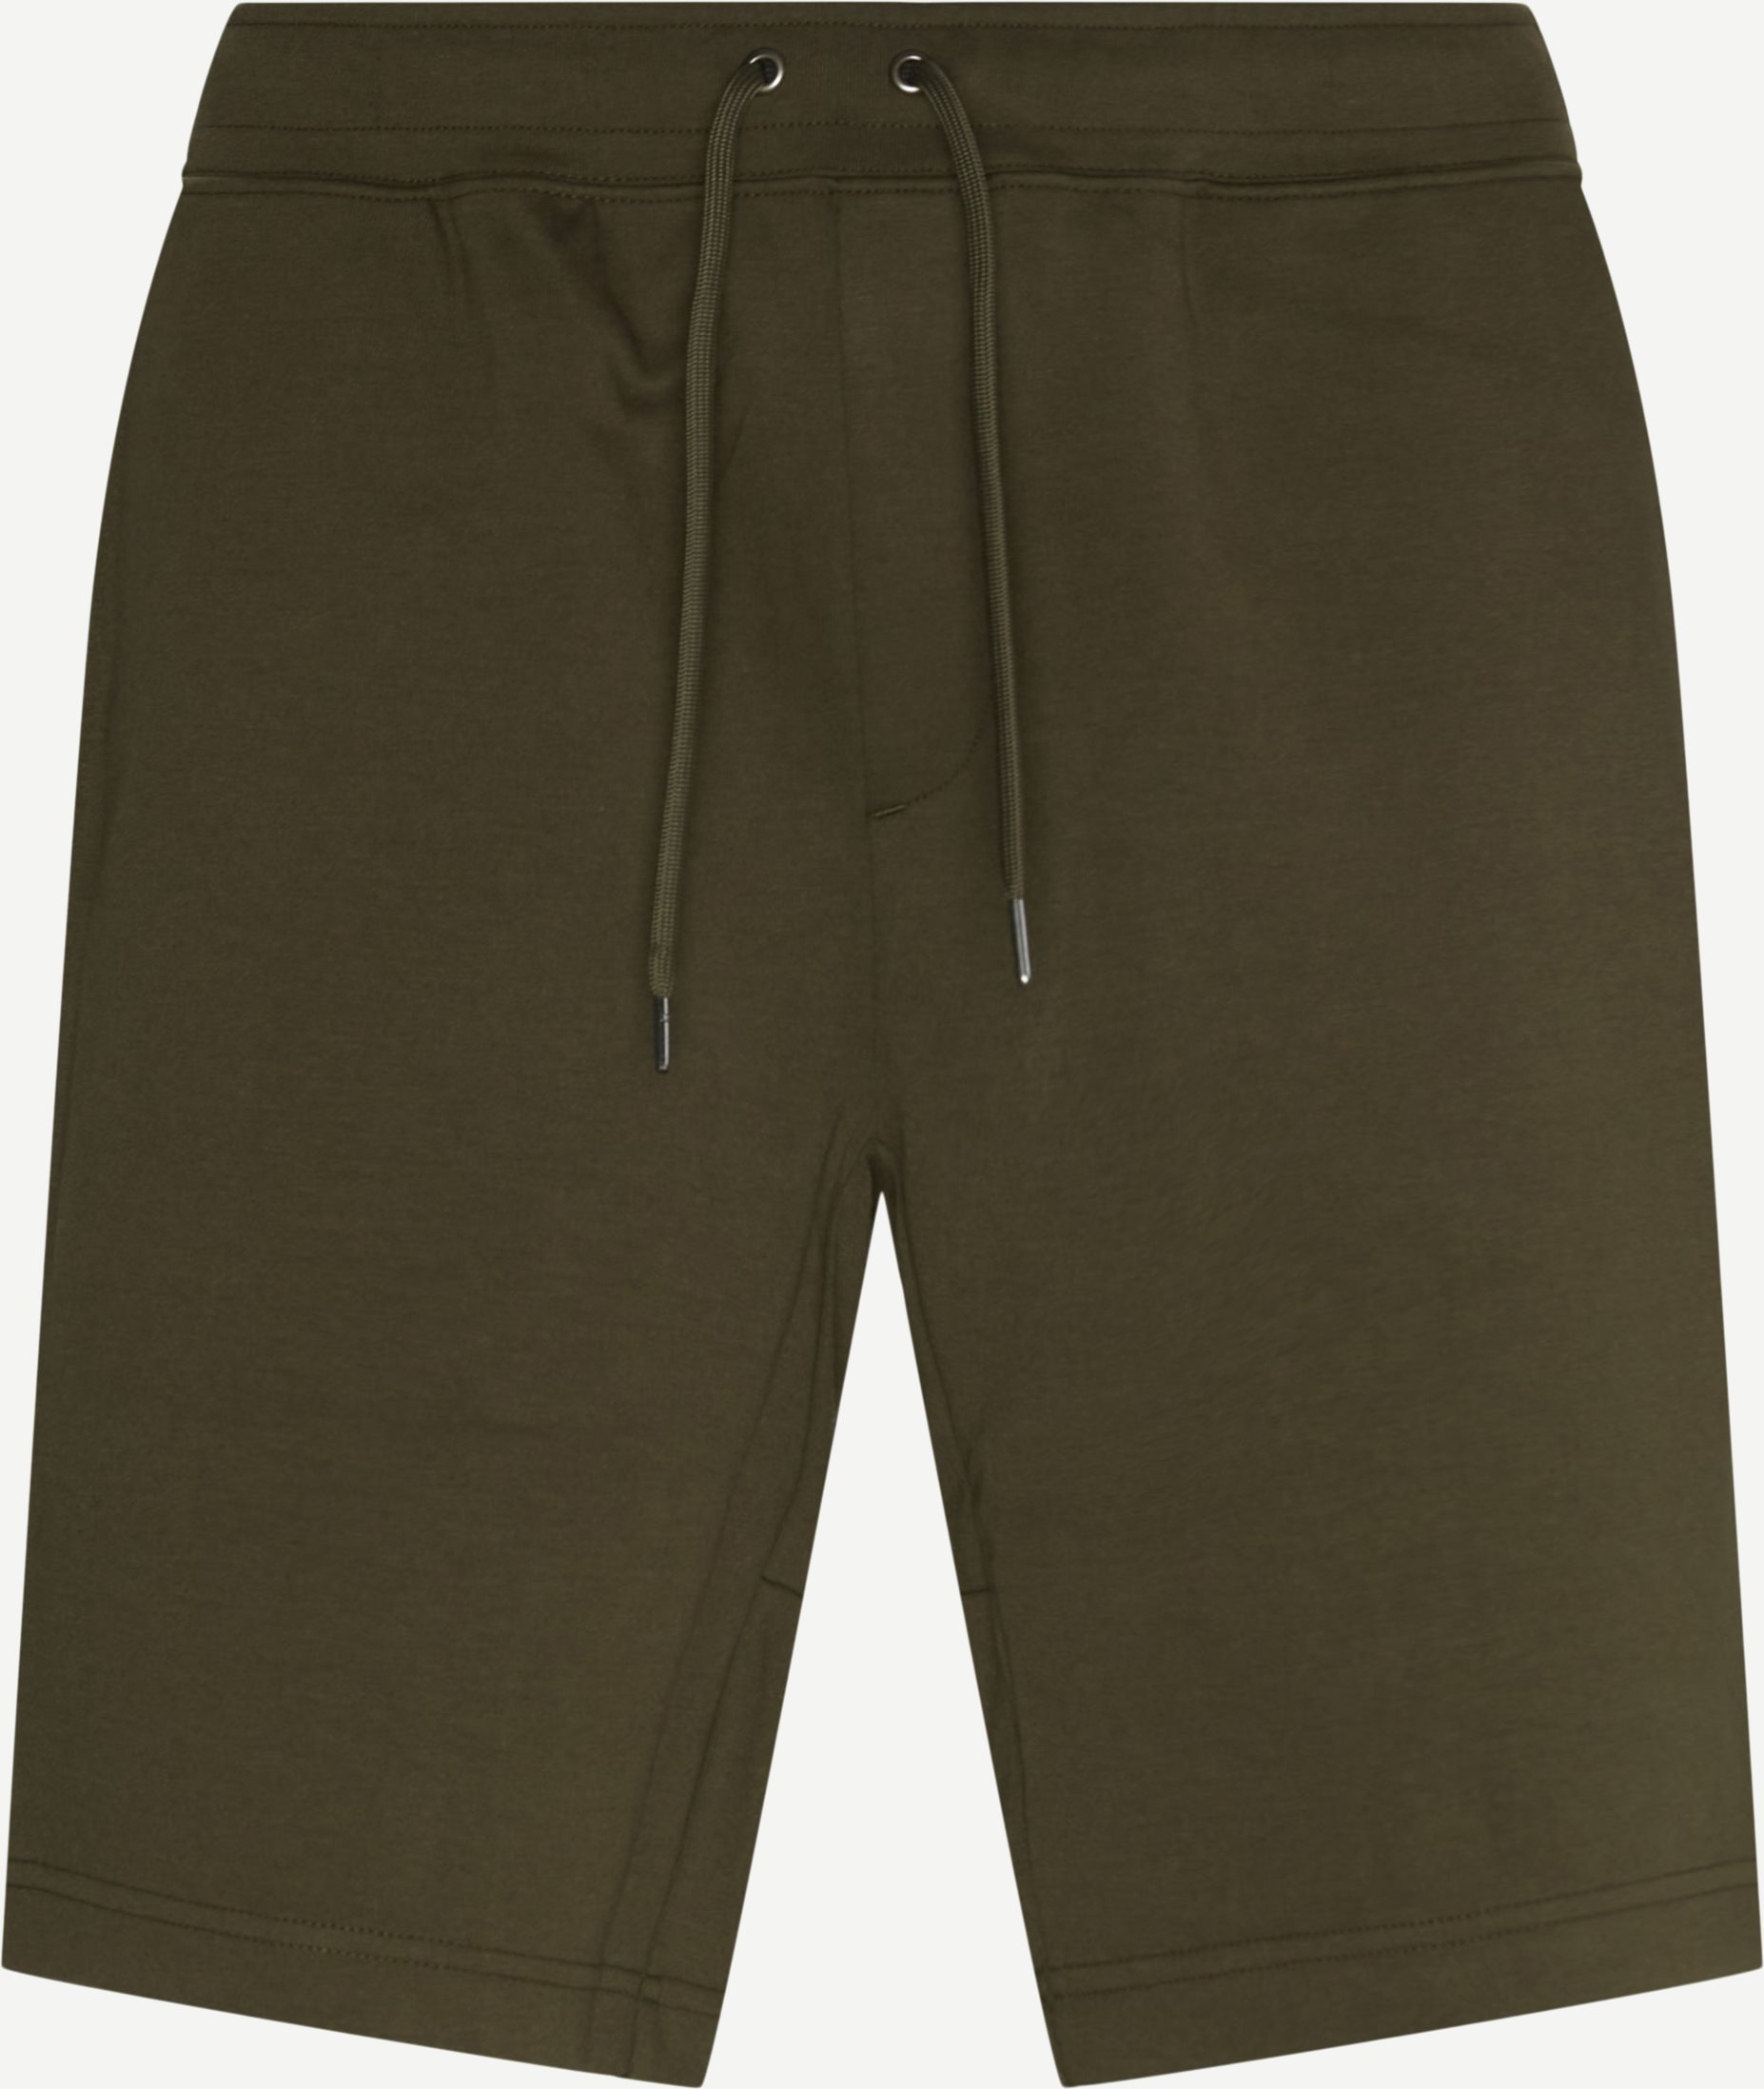 Baumwollshorts - Shorts - Regular fit - Oliv